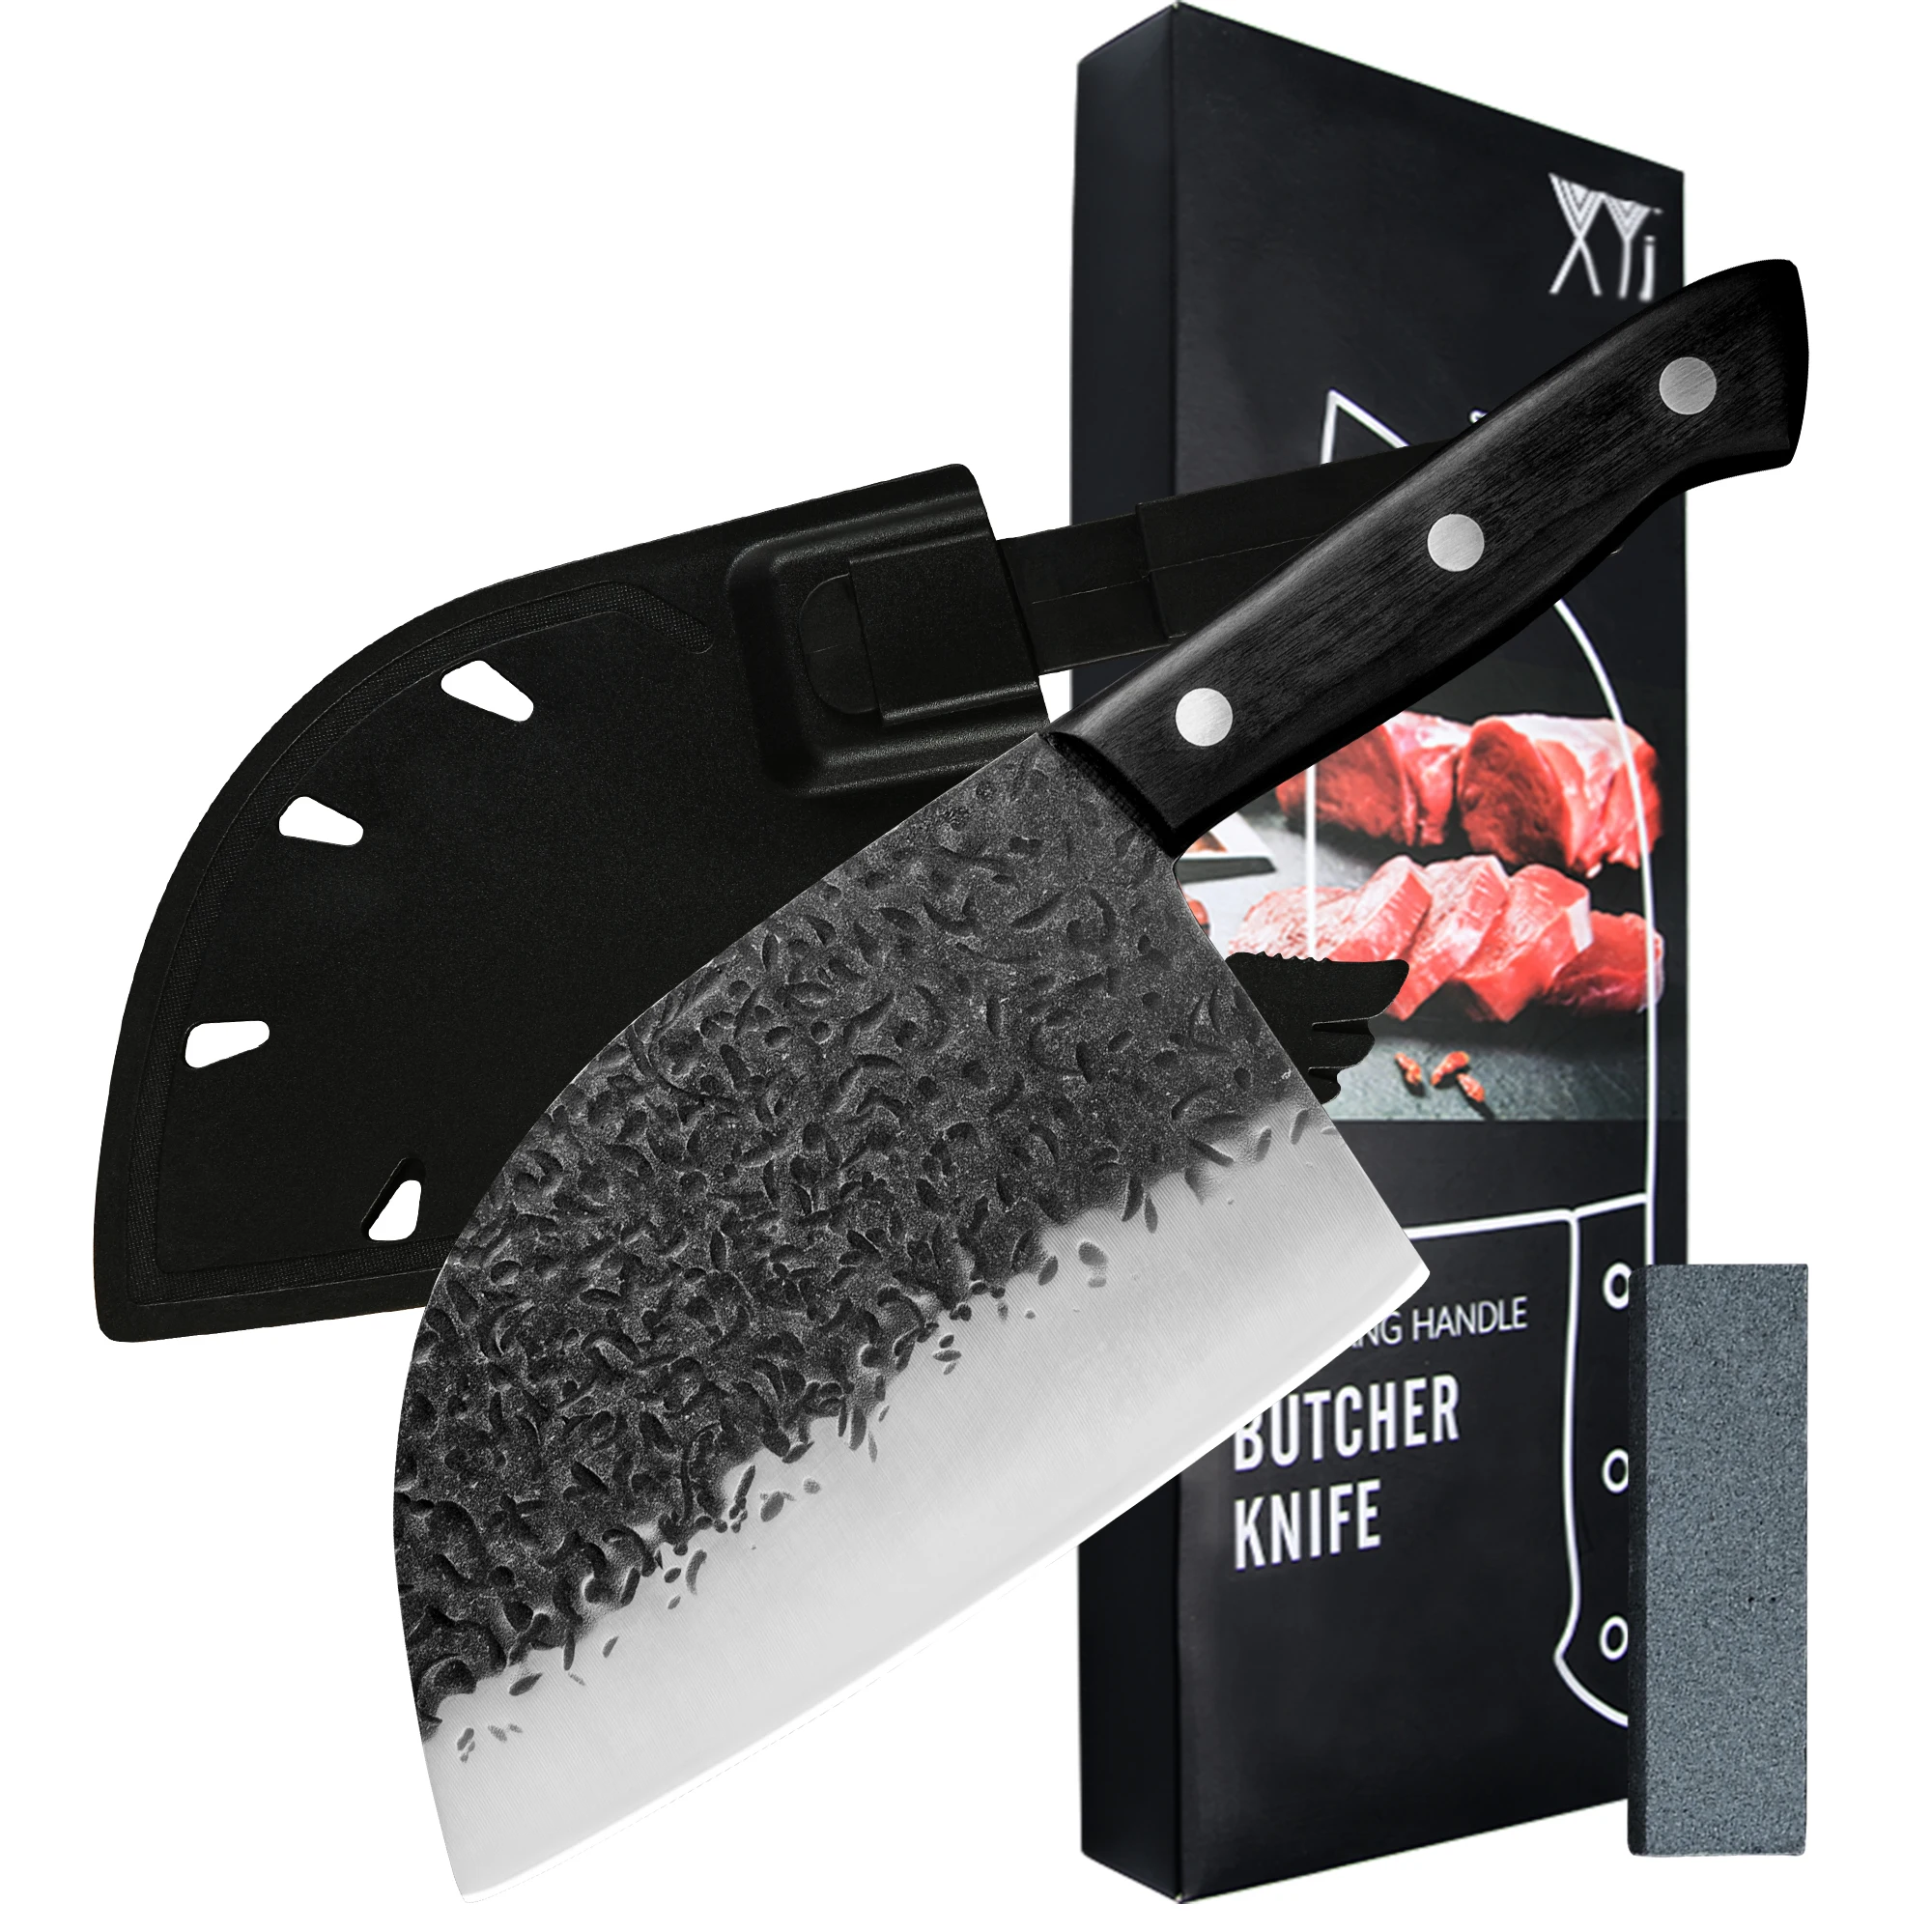 

XYj нож мясника, нож для нарезки мяса из нержавеющей стали, нож для готовки, 7-дюймовое широкое лезвие, нож для резки мяса и овощей, ножны, инстр...